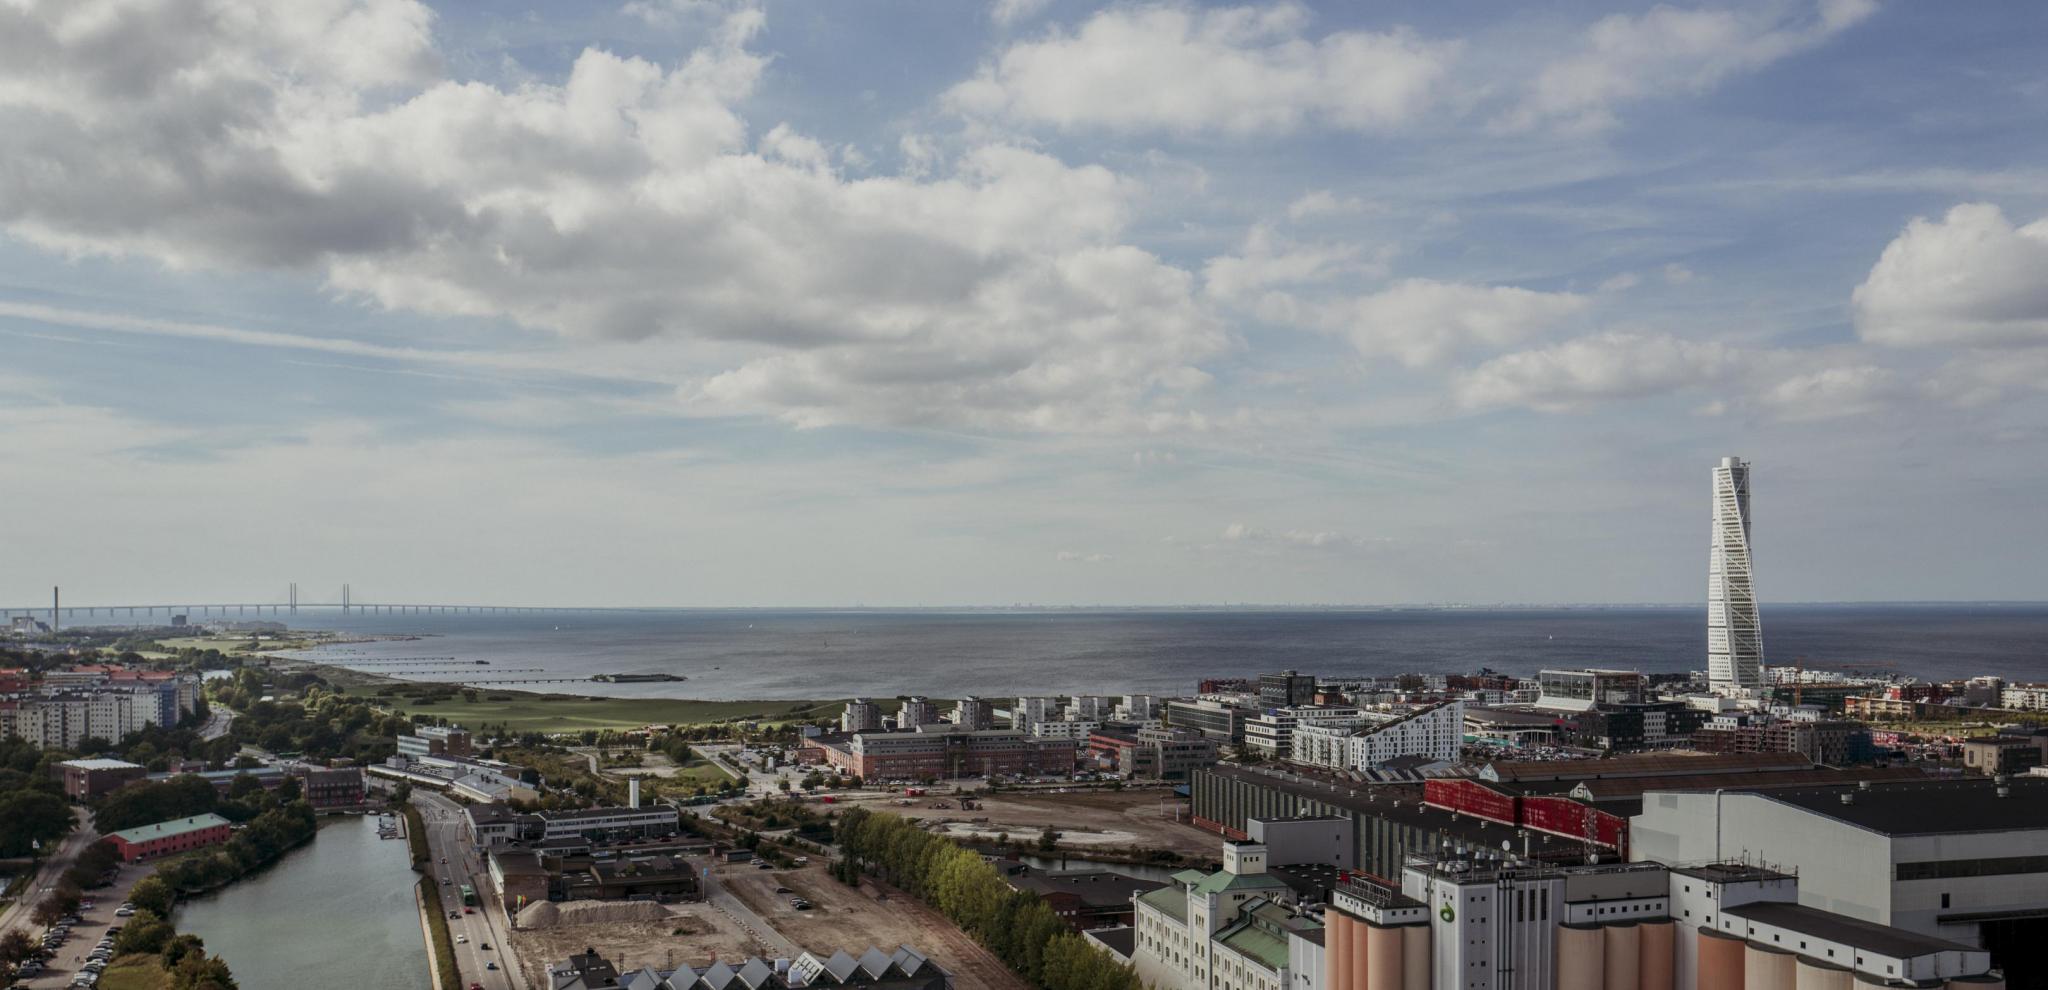 Aerial view of Malmö with Turning torso and the Öresund bridge 